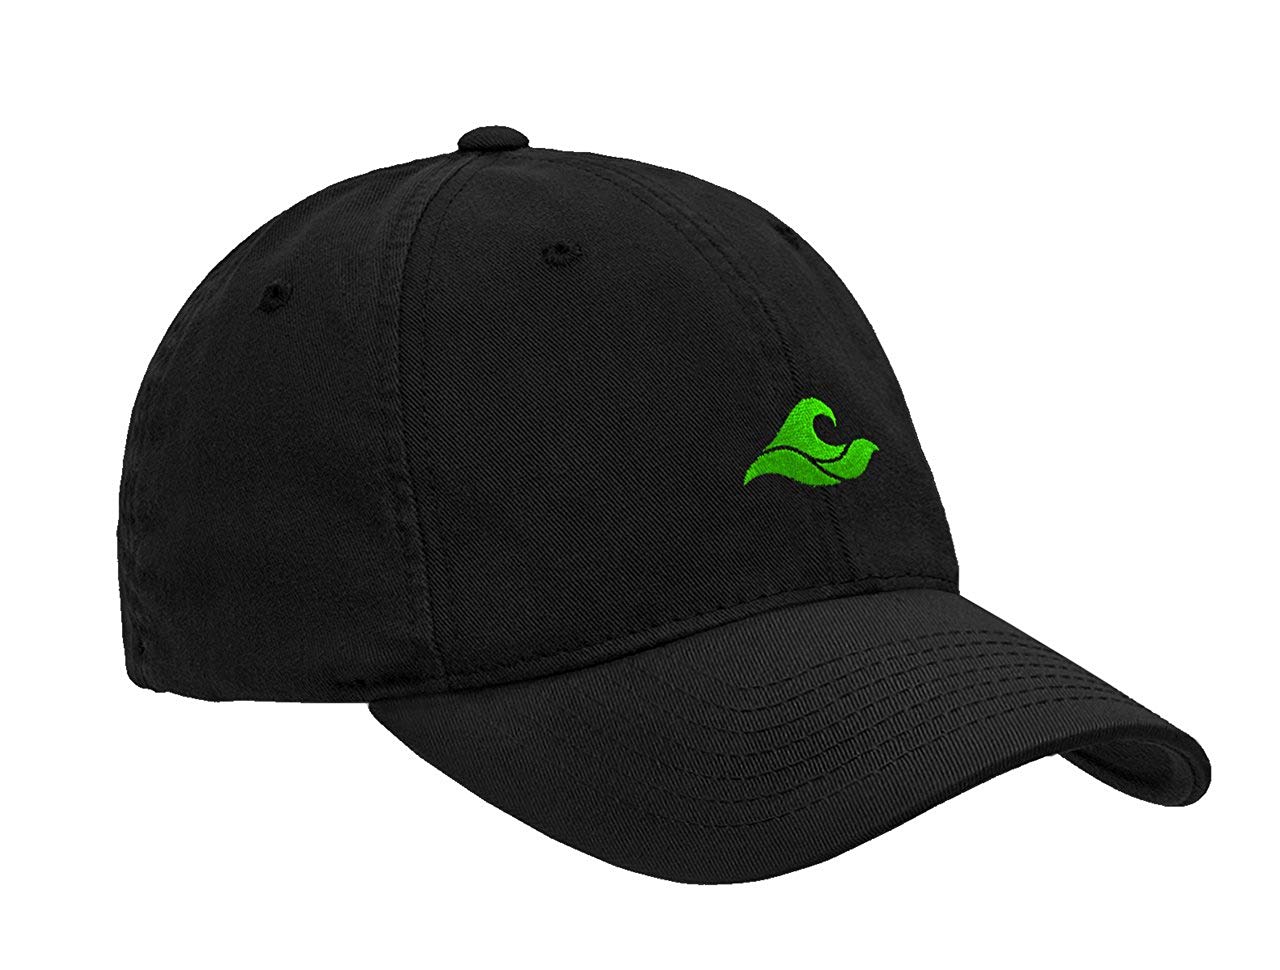 Black Wave Logo - Amazon.com: Koloa Surf Wave Logo Soft & Cozy Adjustable Baseball Cap ...